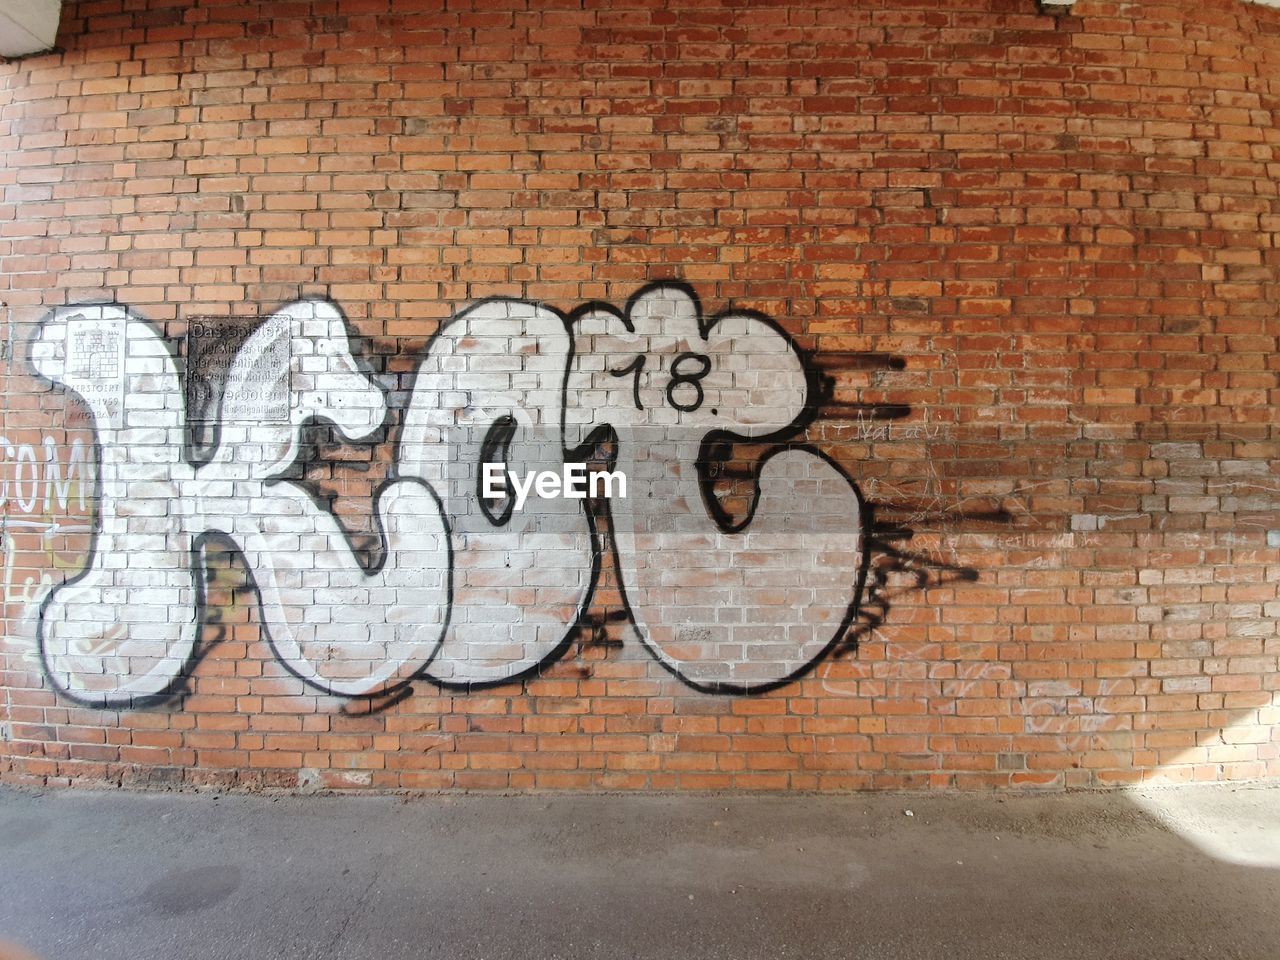 GRAFFITI ON WALL BY BRICK ON FOOTPATH